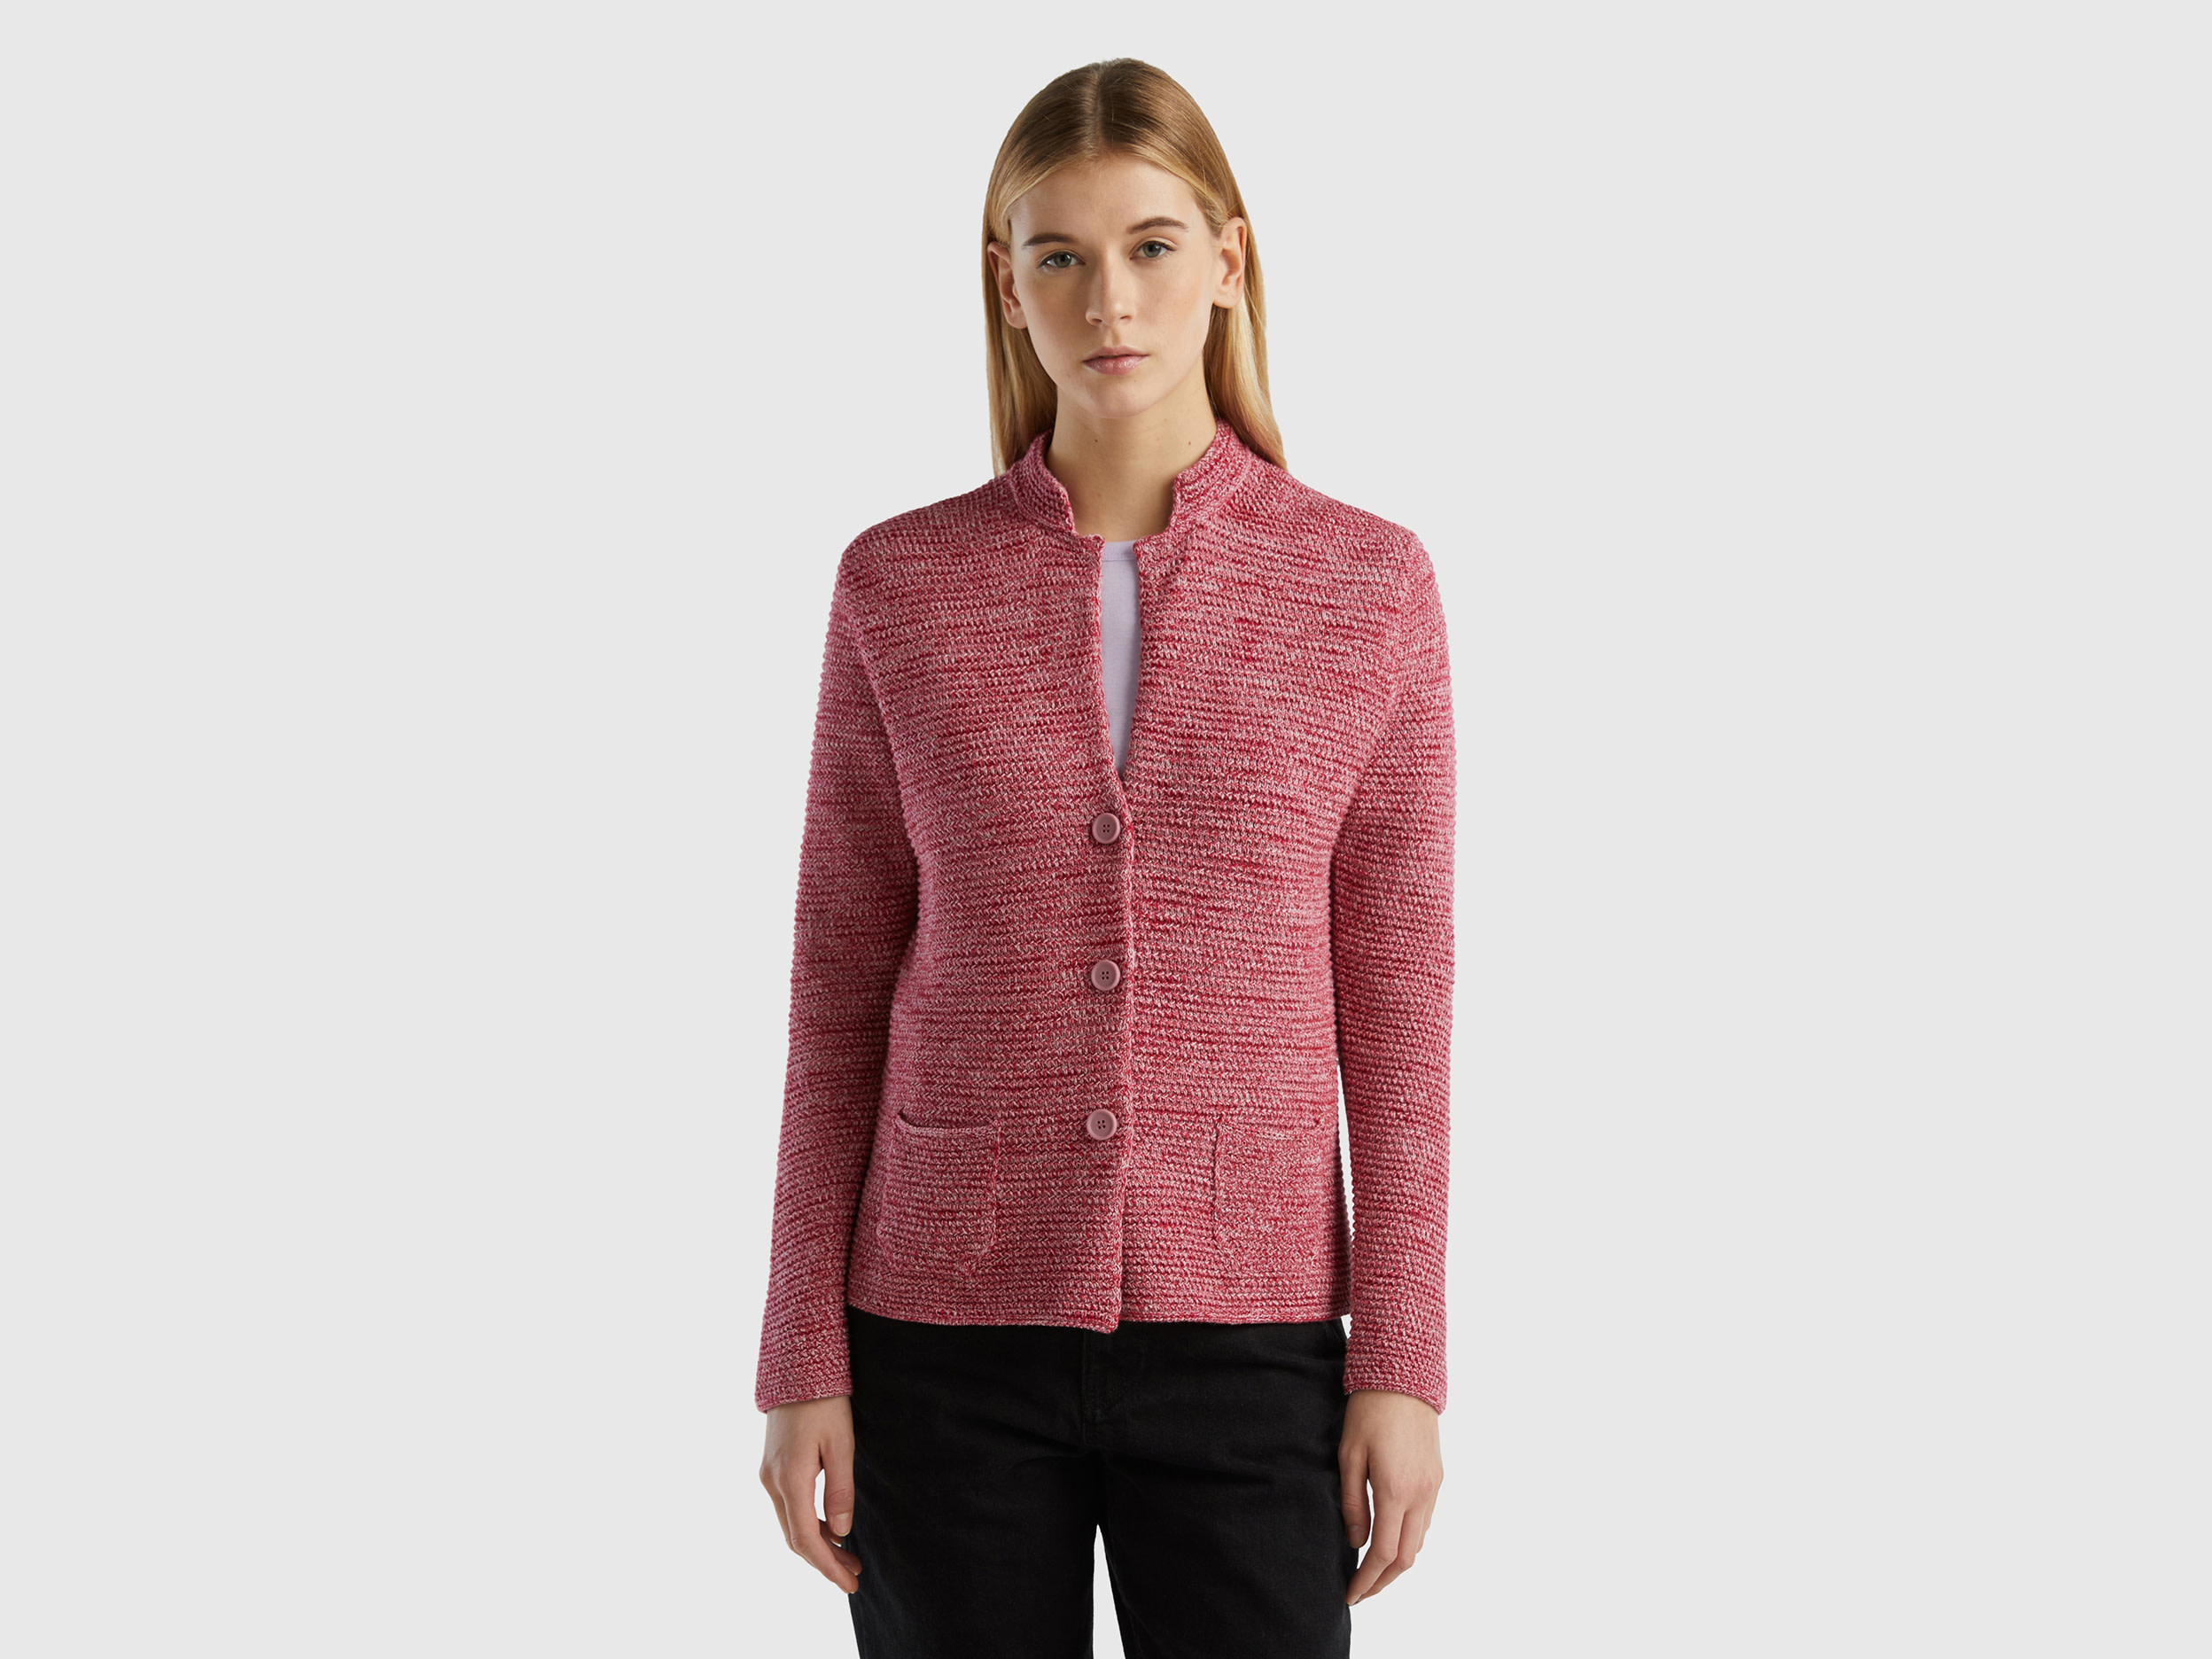 Benetton, 100% Cotton Knit Jacket, size XS, Fuchsia, Women